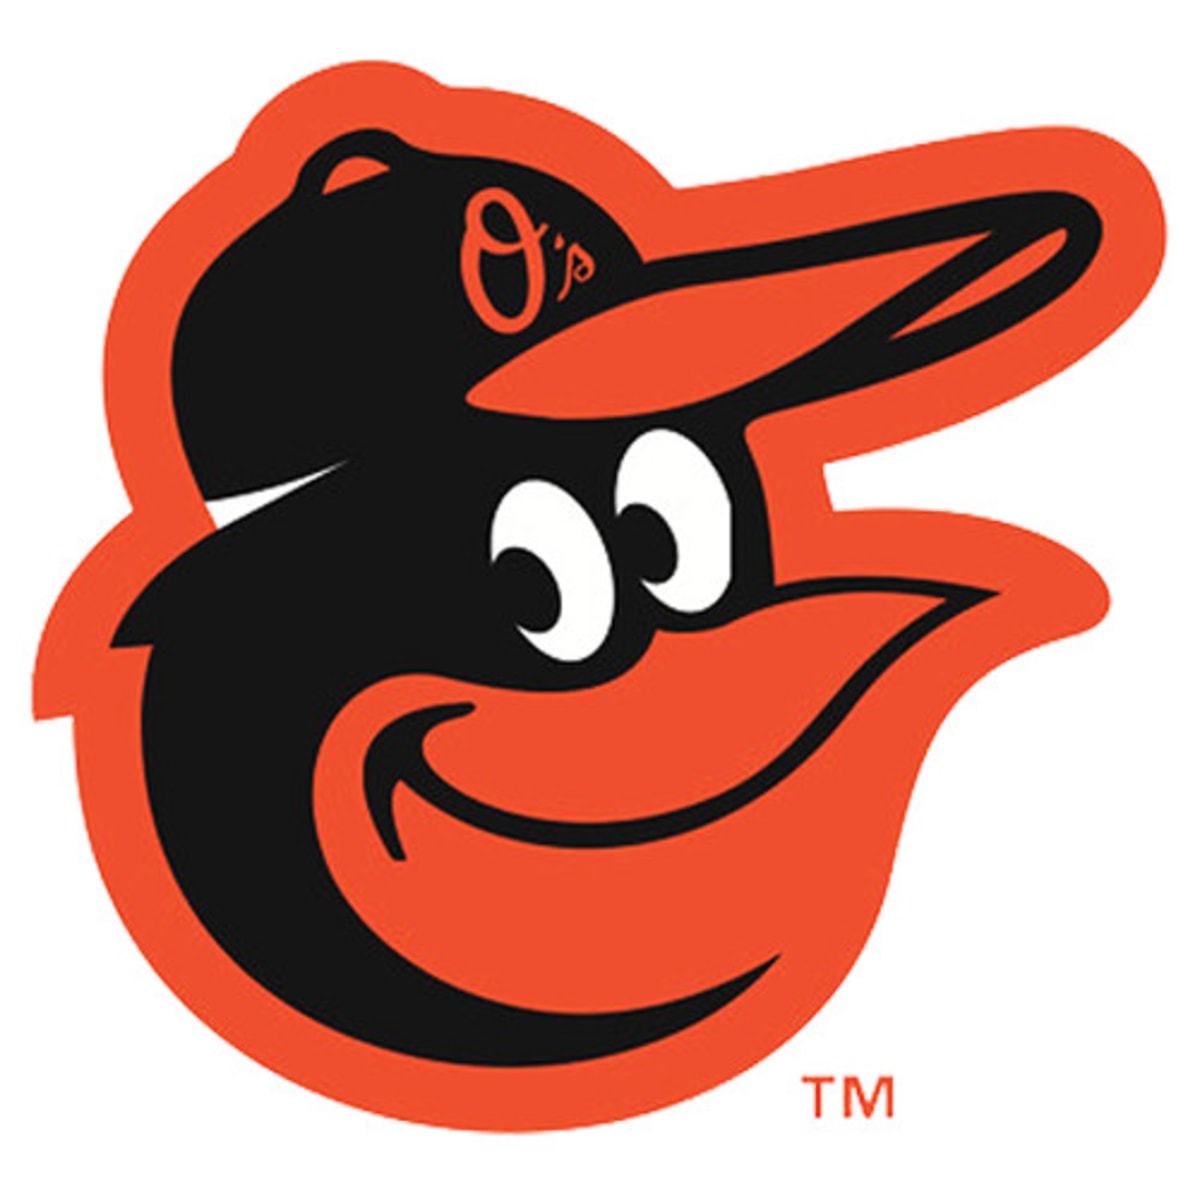 2022 Fantasy Baseball: Baltimore Orioles Team Outlook - Sports Illustrated